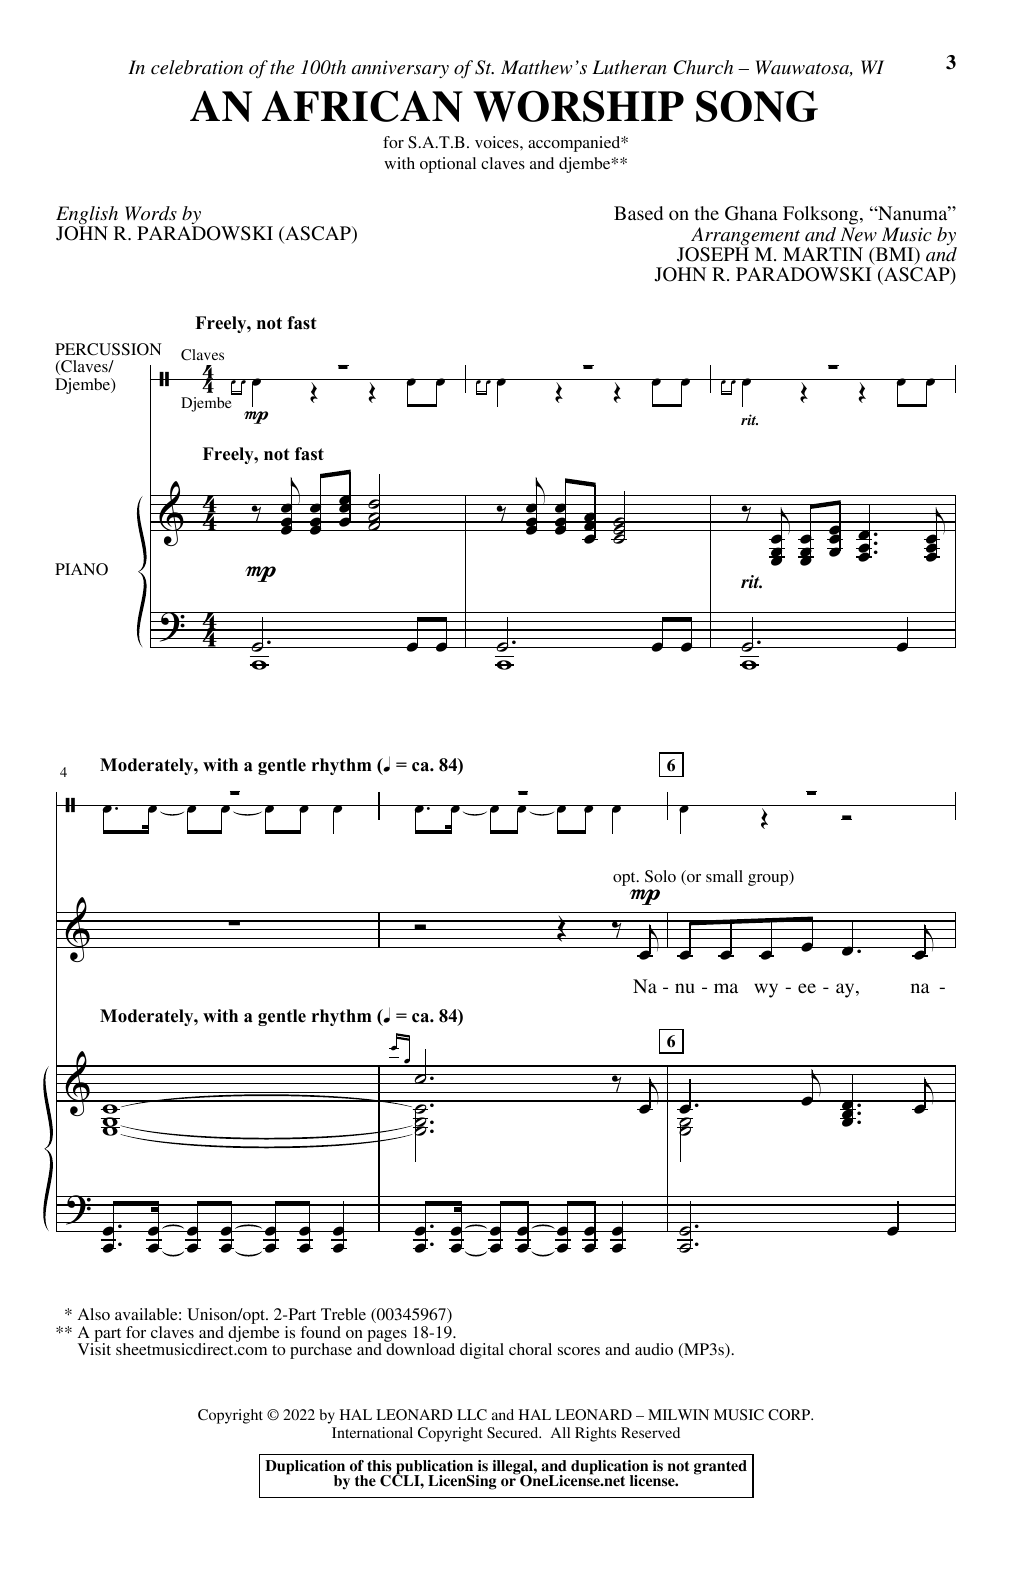 Download Joseph M. Martin and John R. Paradow An African Worship Song Sheet Music